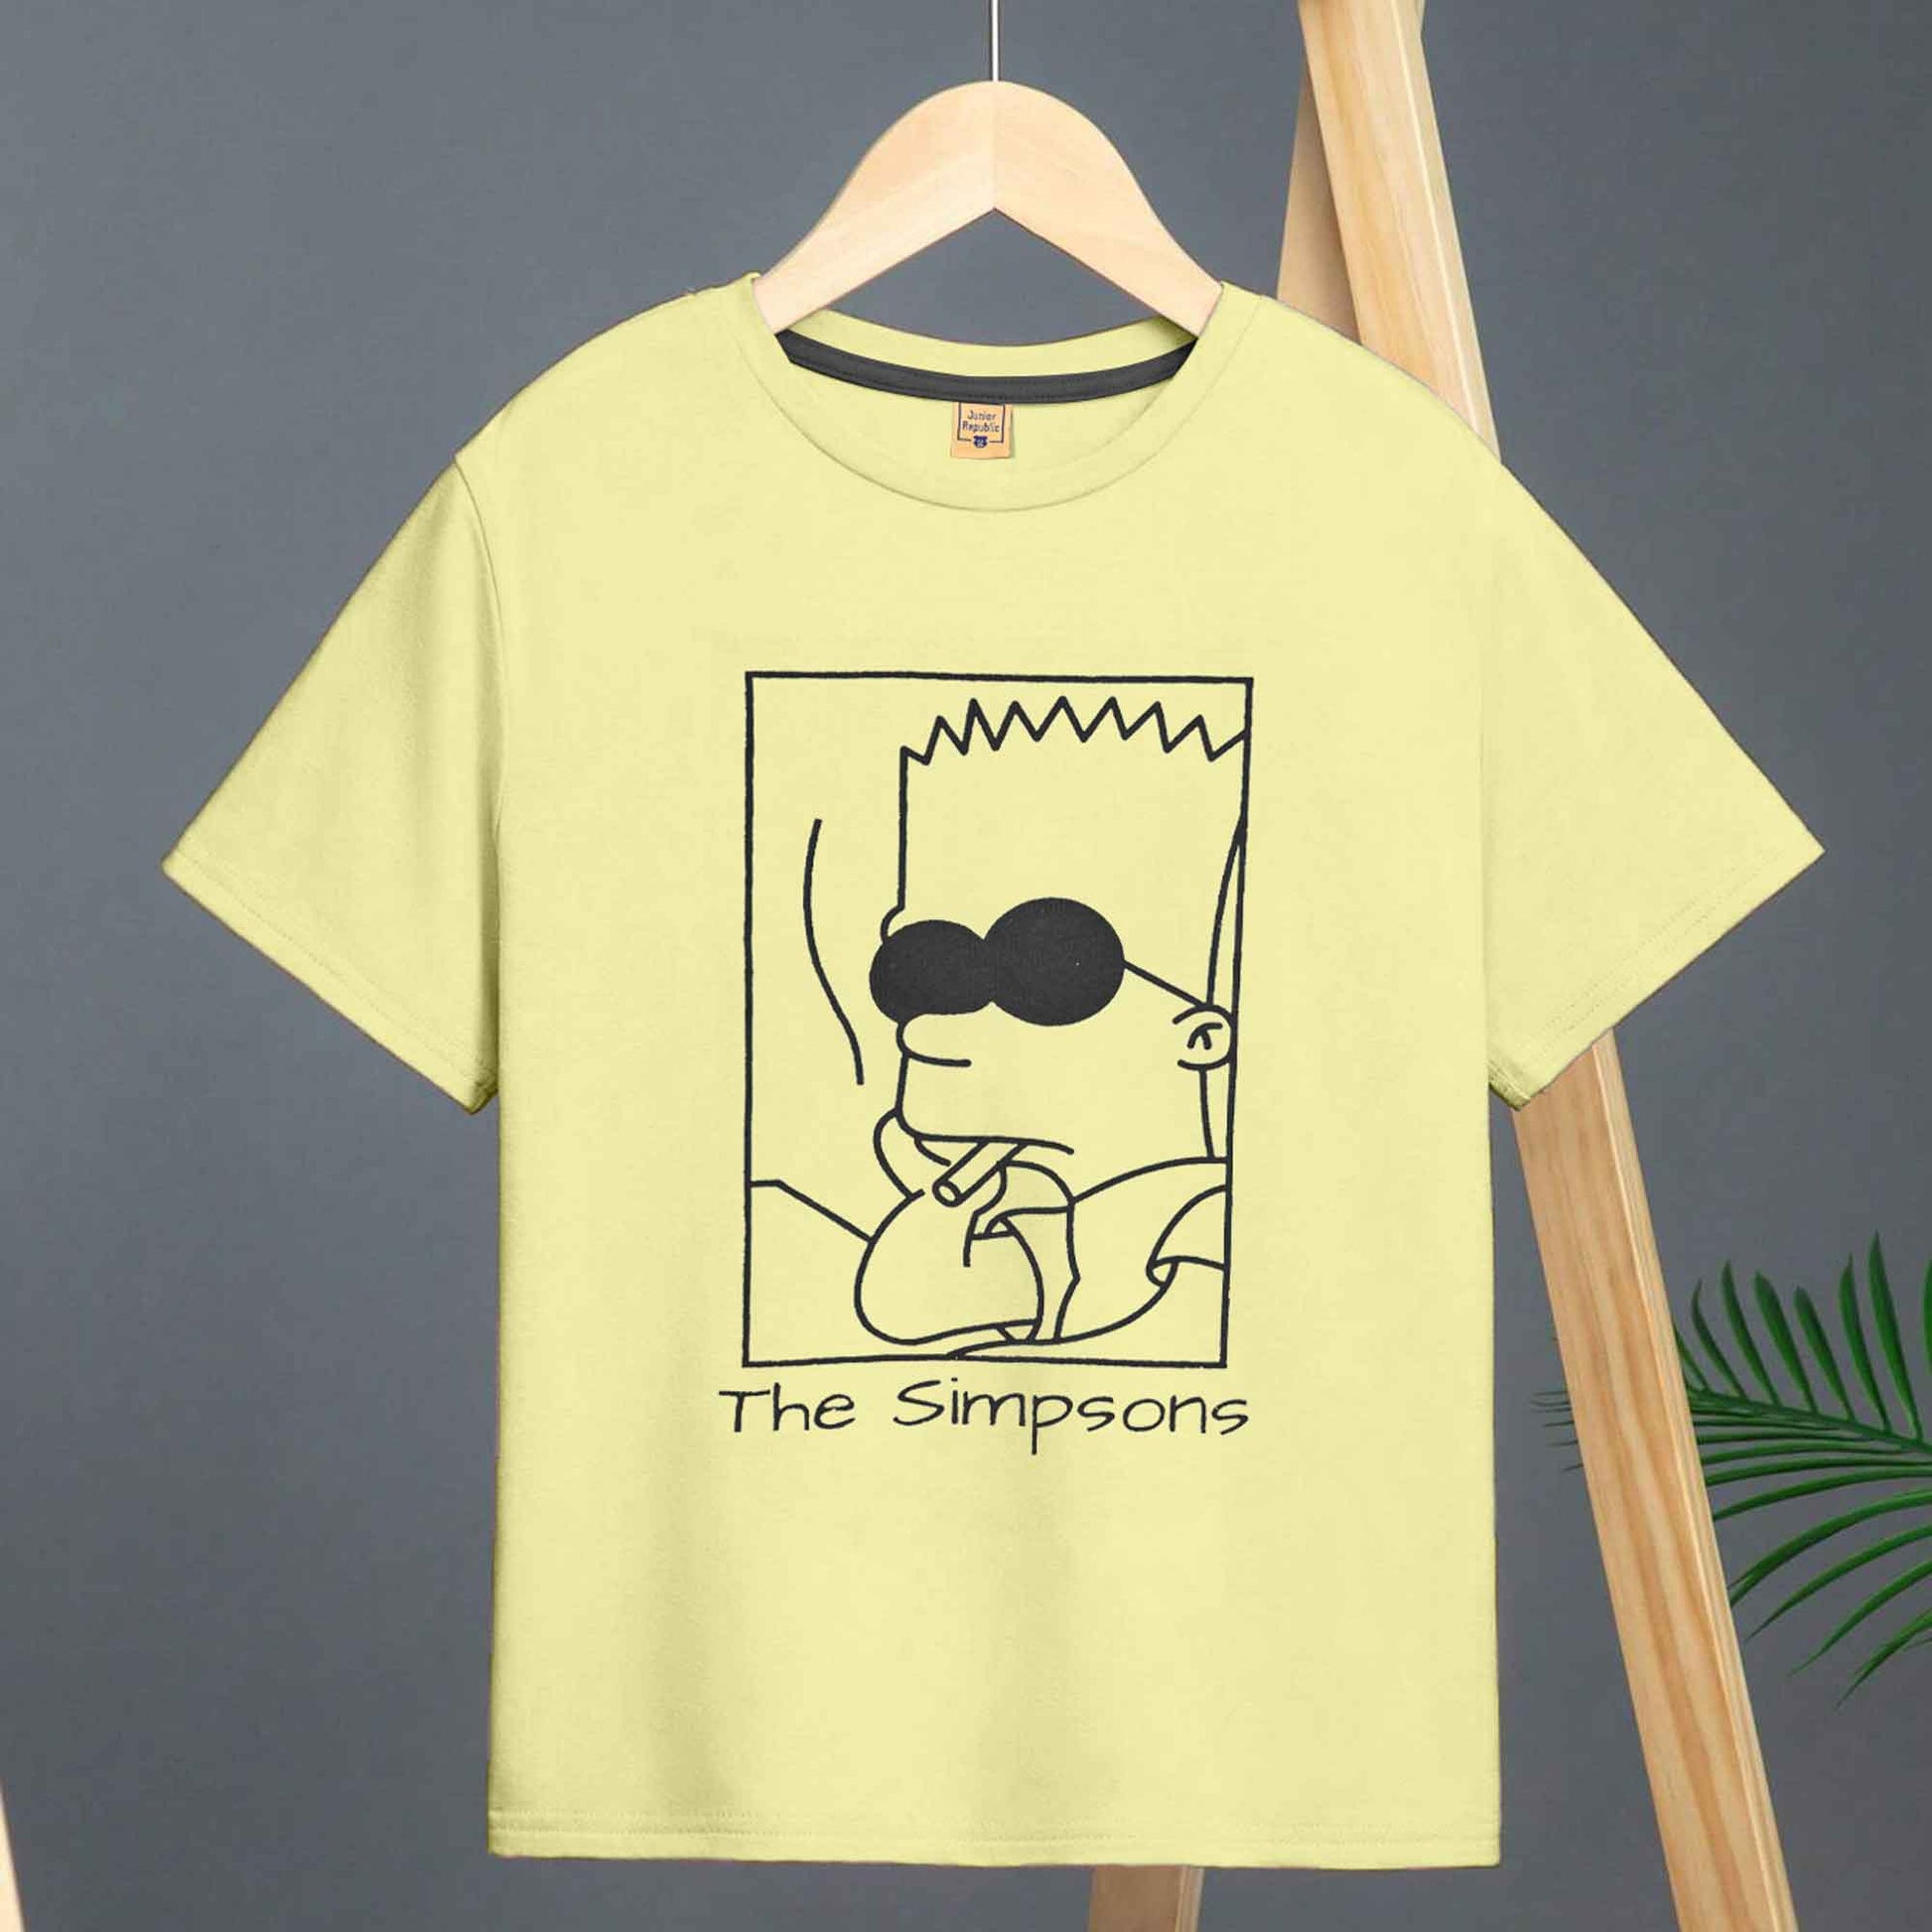 Junior Republic Kid's The Simpsons Printed Tee Shirt Boy's Tee Shirt JRR Light Yellow 1-2 Years 